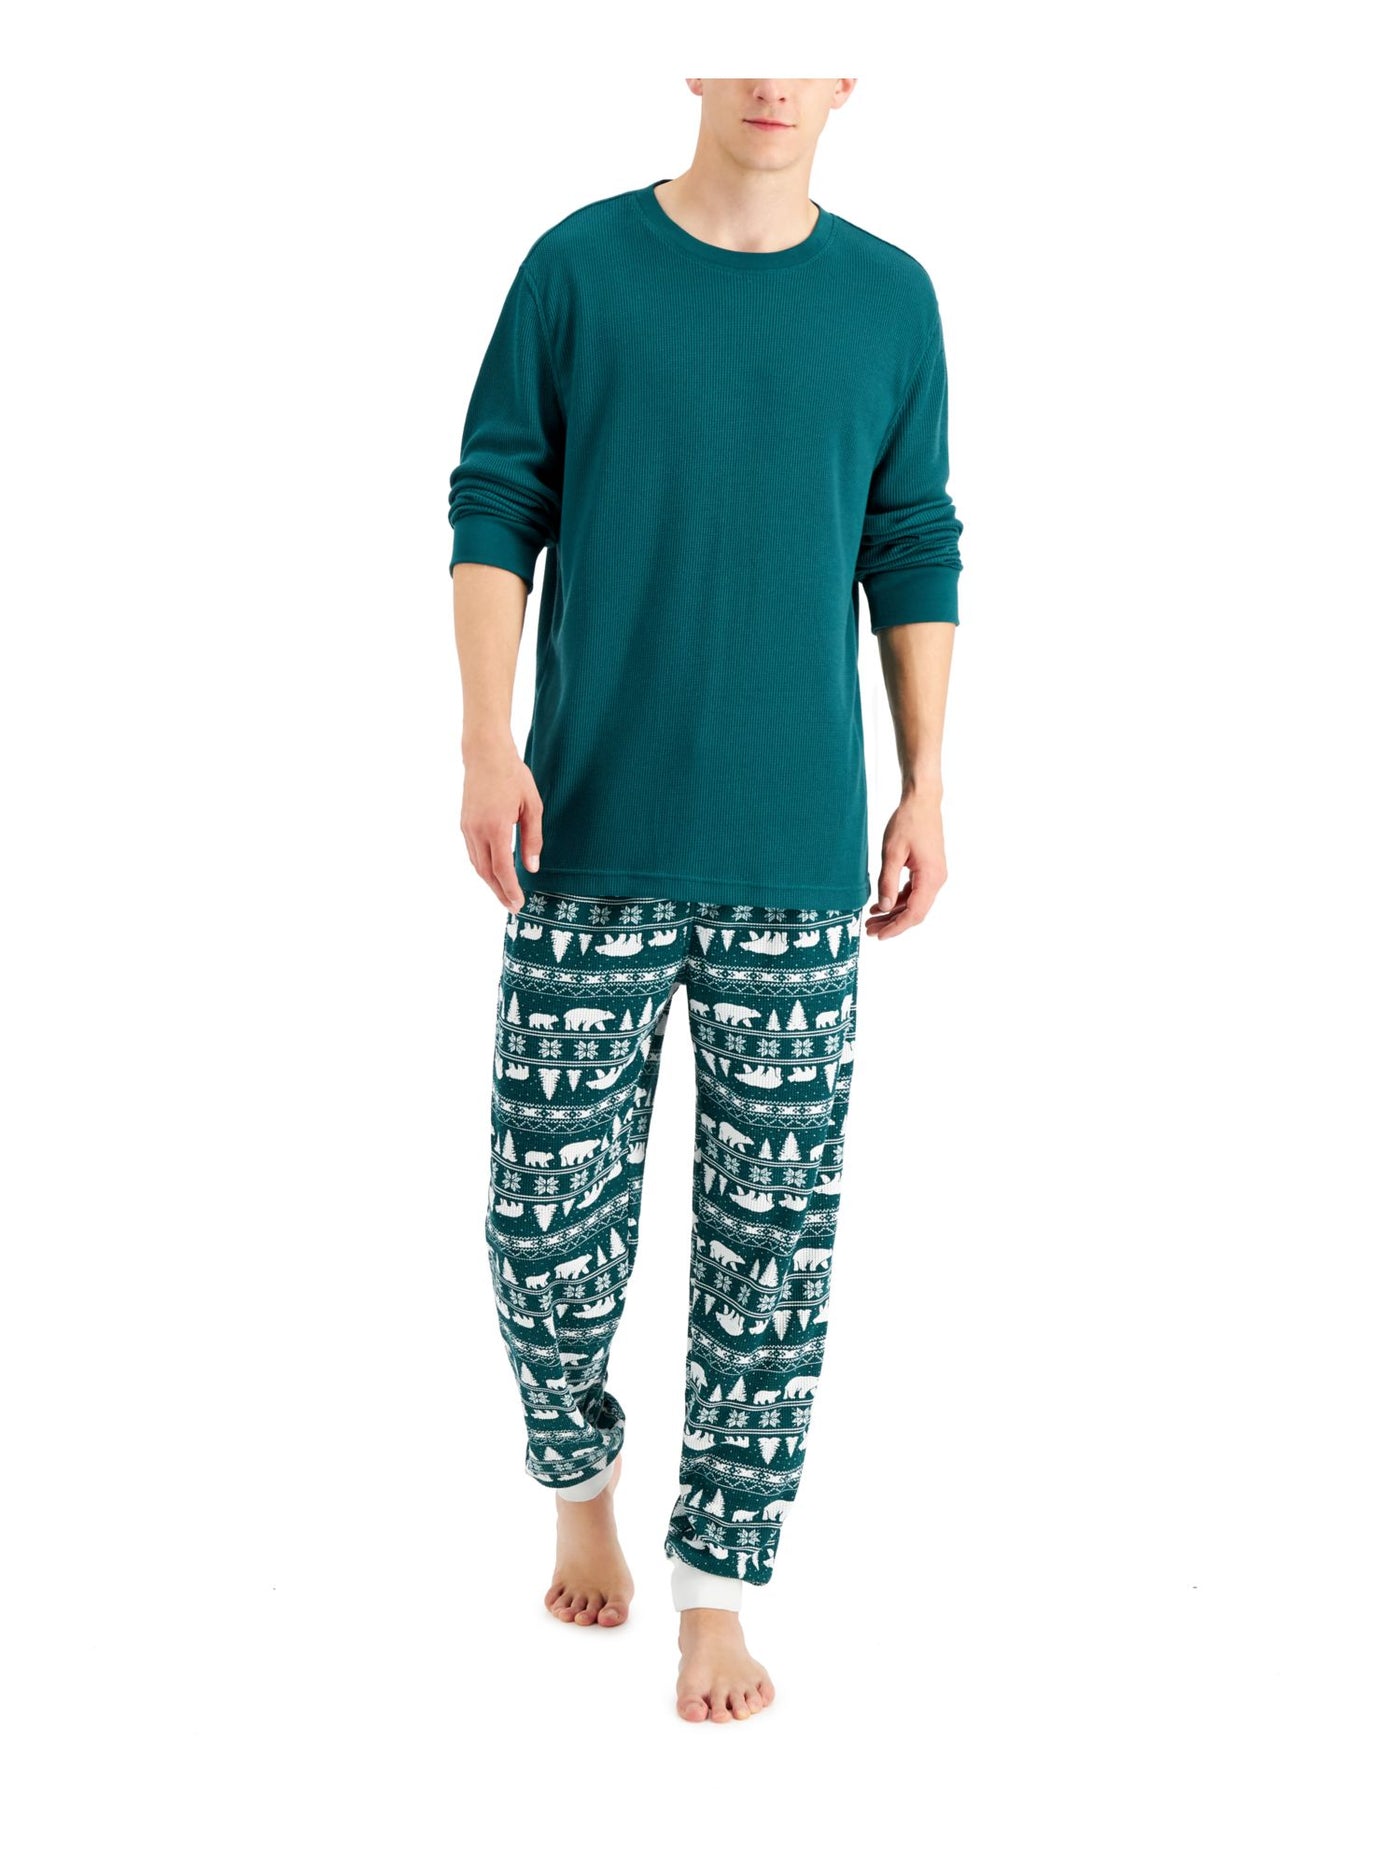 FAMILY PJs Mens Bear Fair Isle Green Textured Long Sleeve T-Shirt Top Cuffed Pants Pajamas XXL